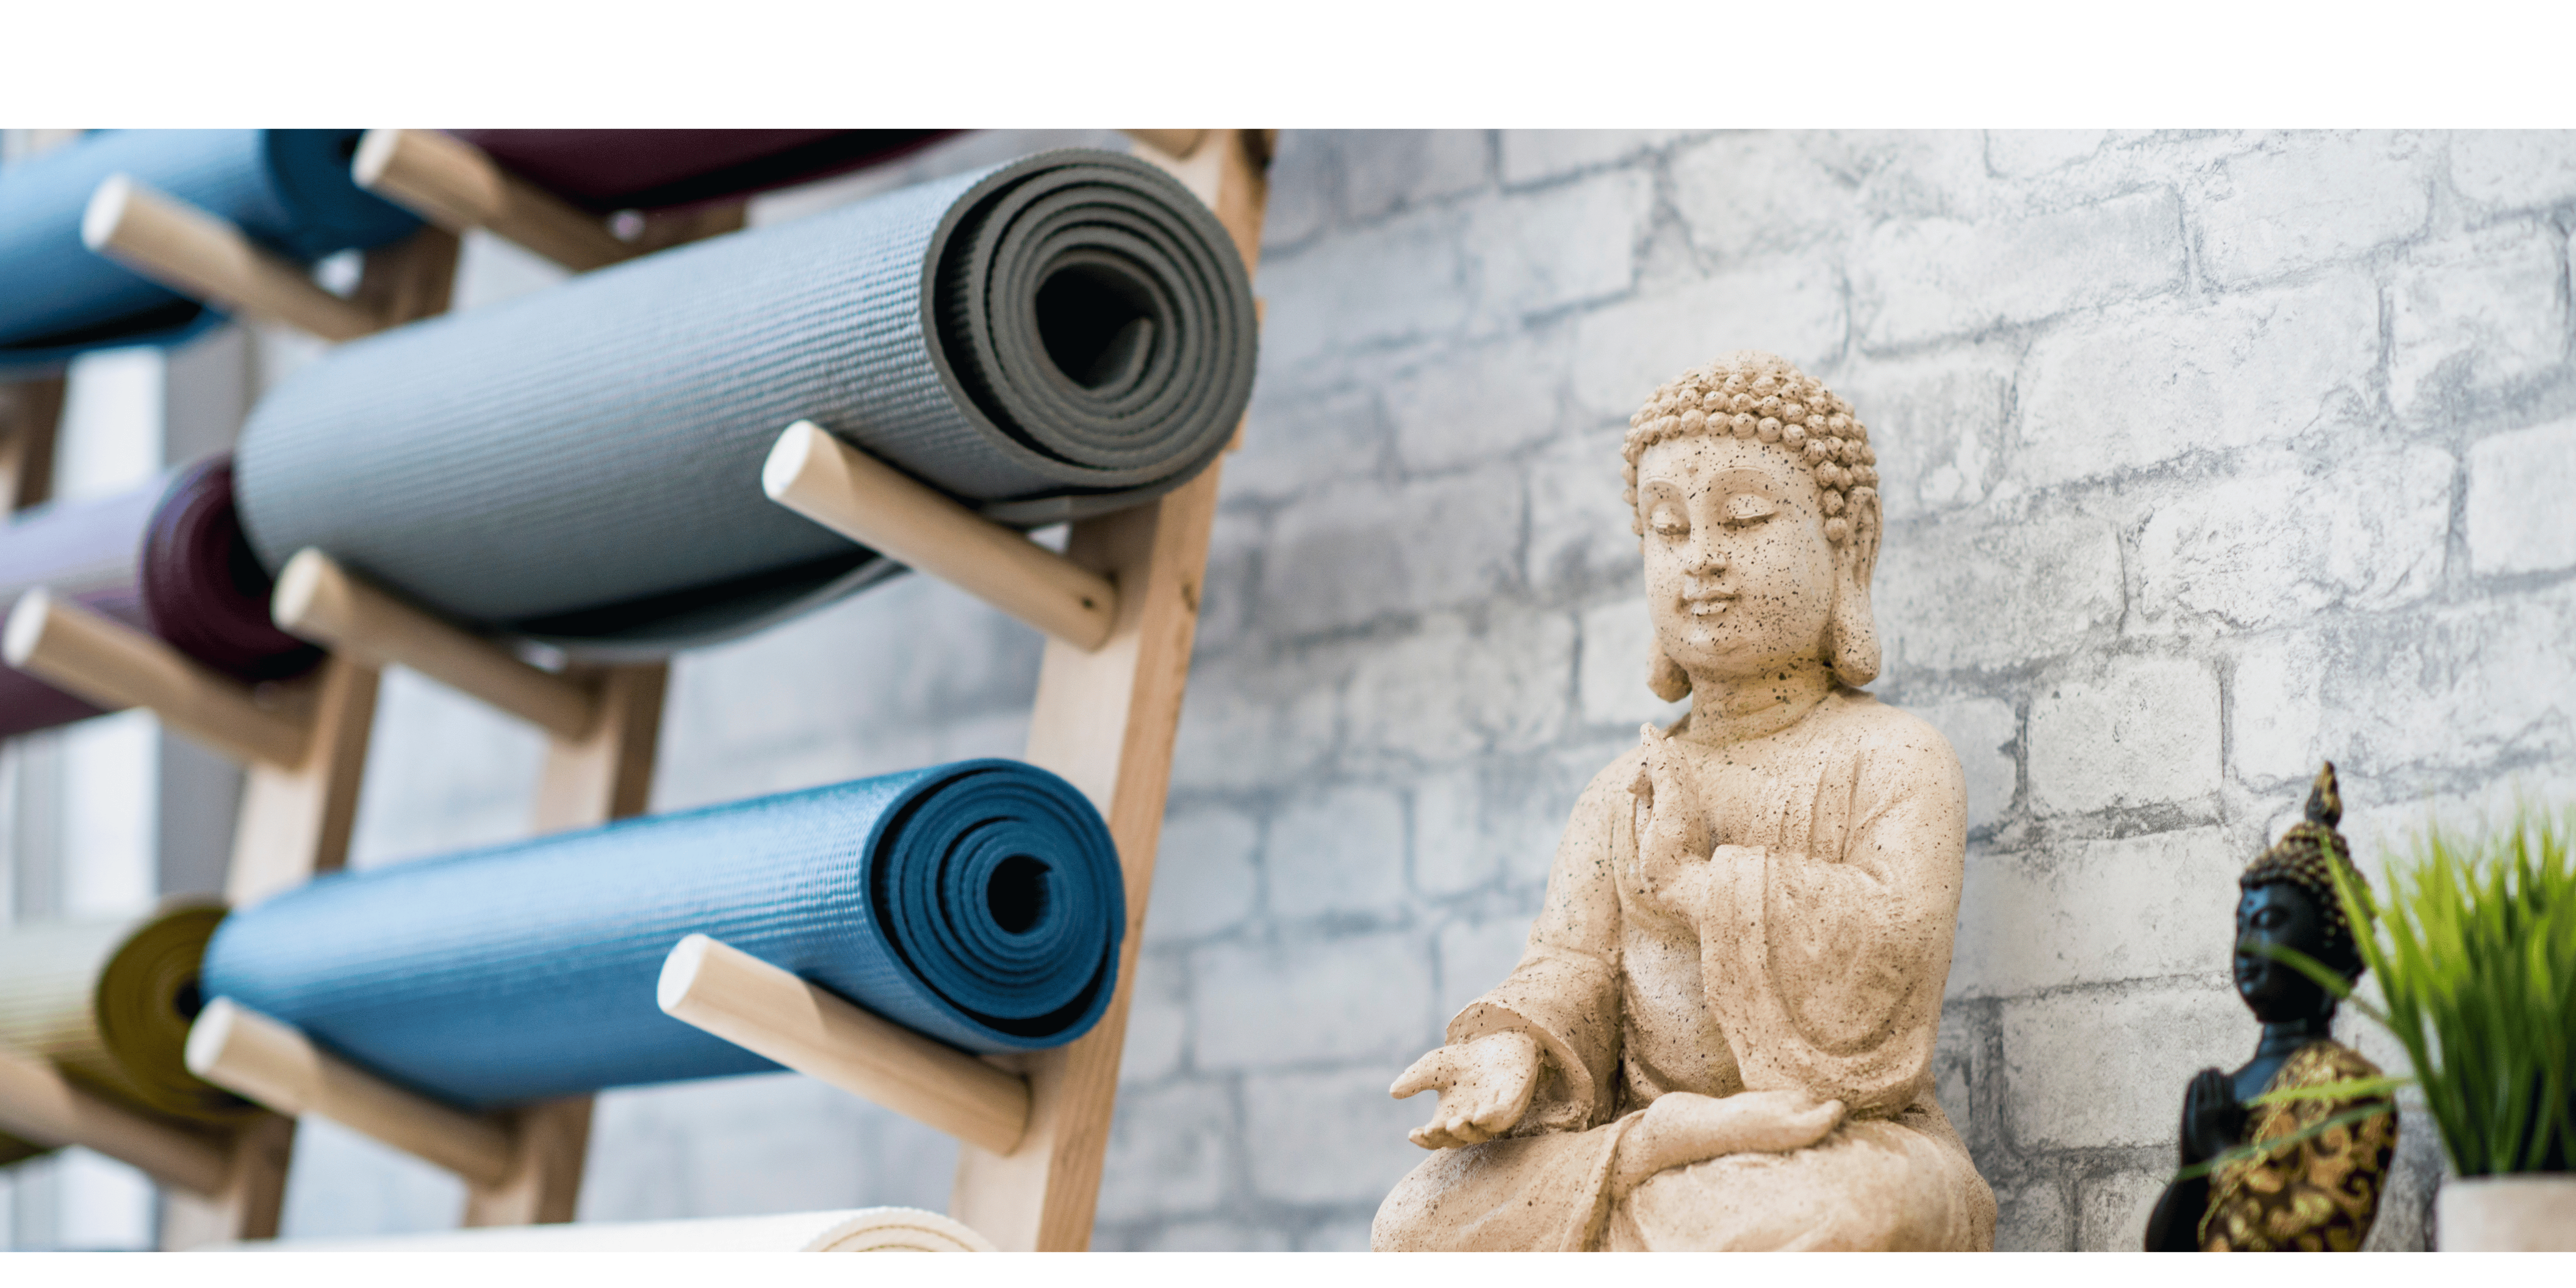 Yoga and Pilates equipment yoga mats, elastic band yoga wedges and foam rollers 